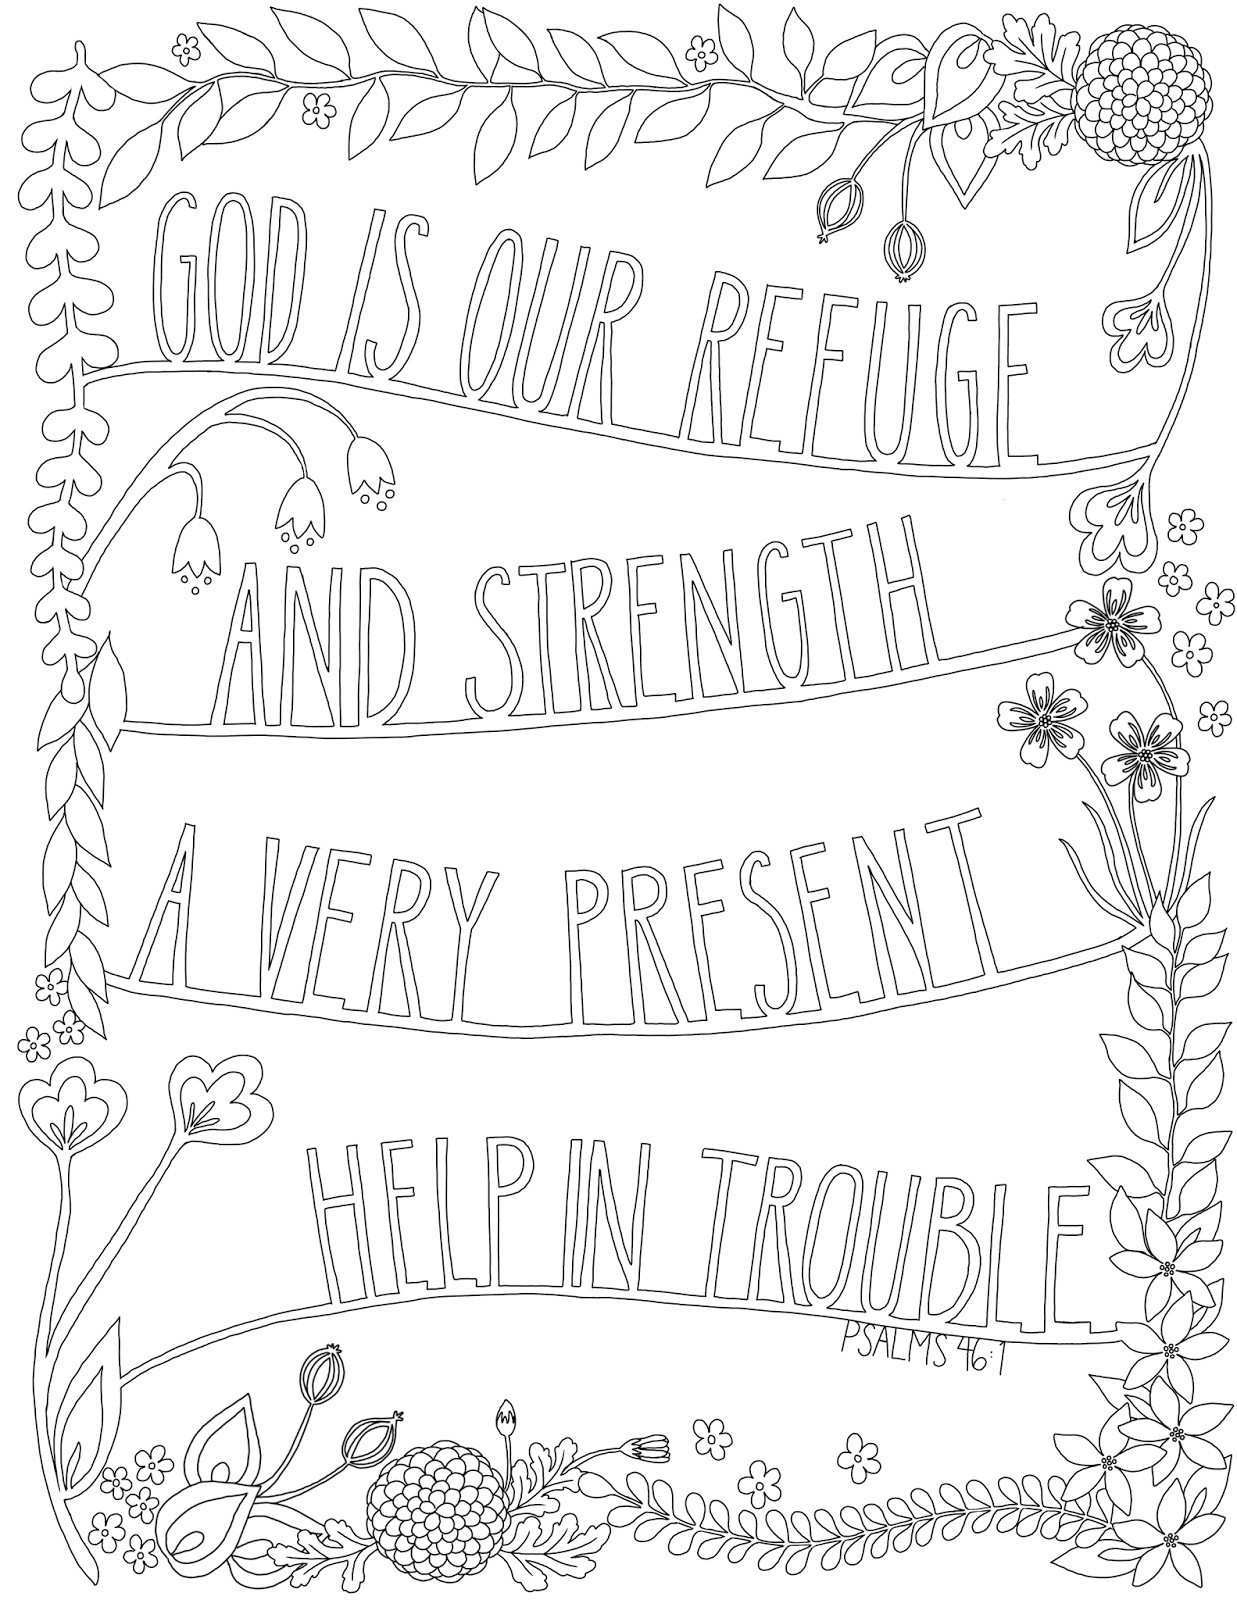 Psalm 23 Coloring Page Unique HD Wallpaper Psalm 23 Printable